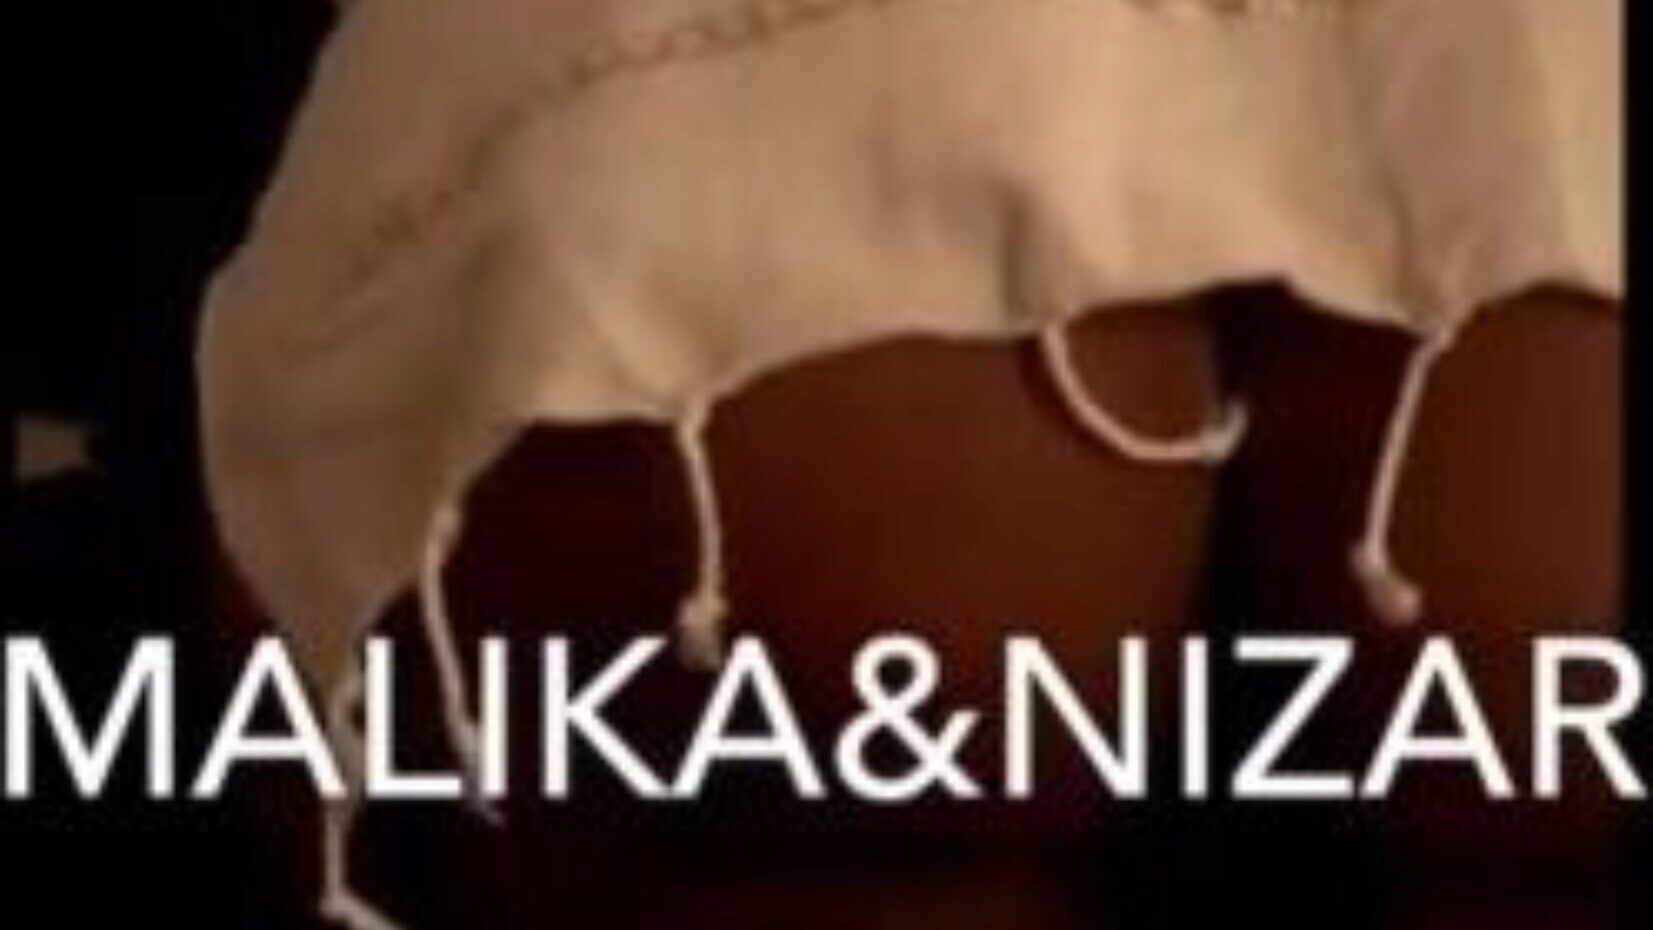 Malika & Nizar: סרטון פורנו הארדקור סקסי בחינם D3 - xhamster צפה בפרק אורגיה של Malika & Nizar בחינם לכולם על xhamster